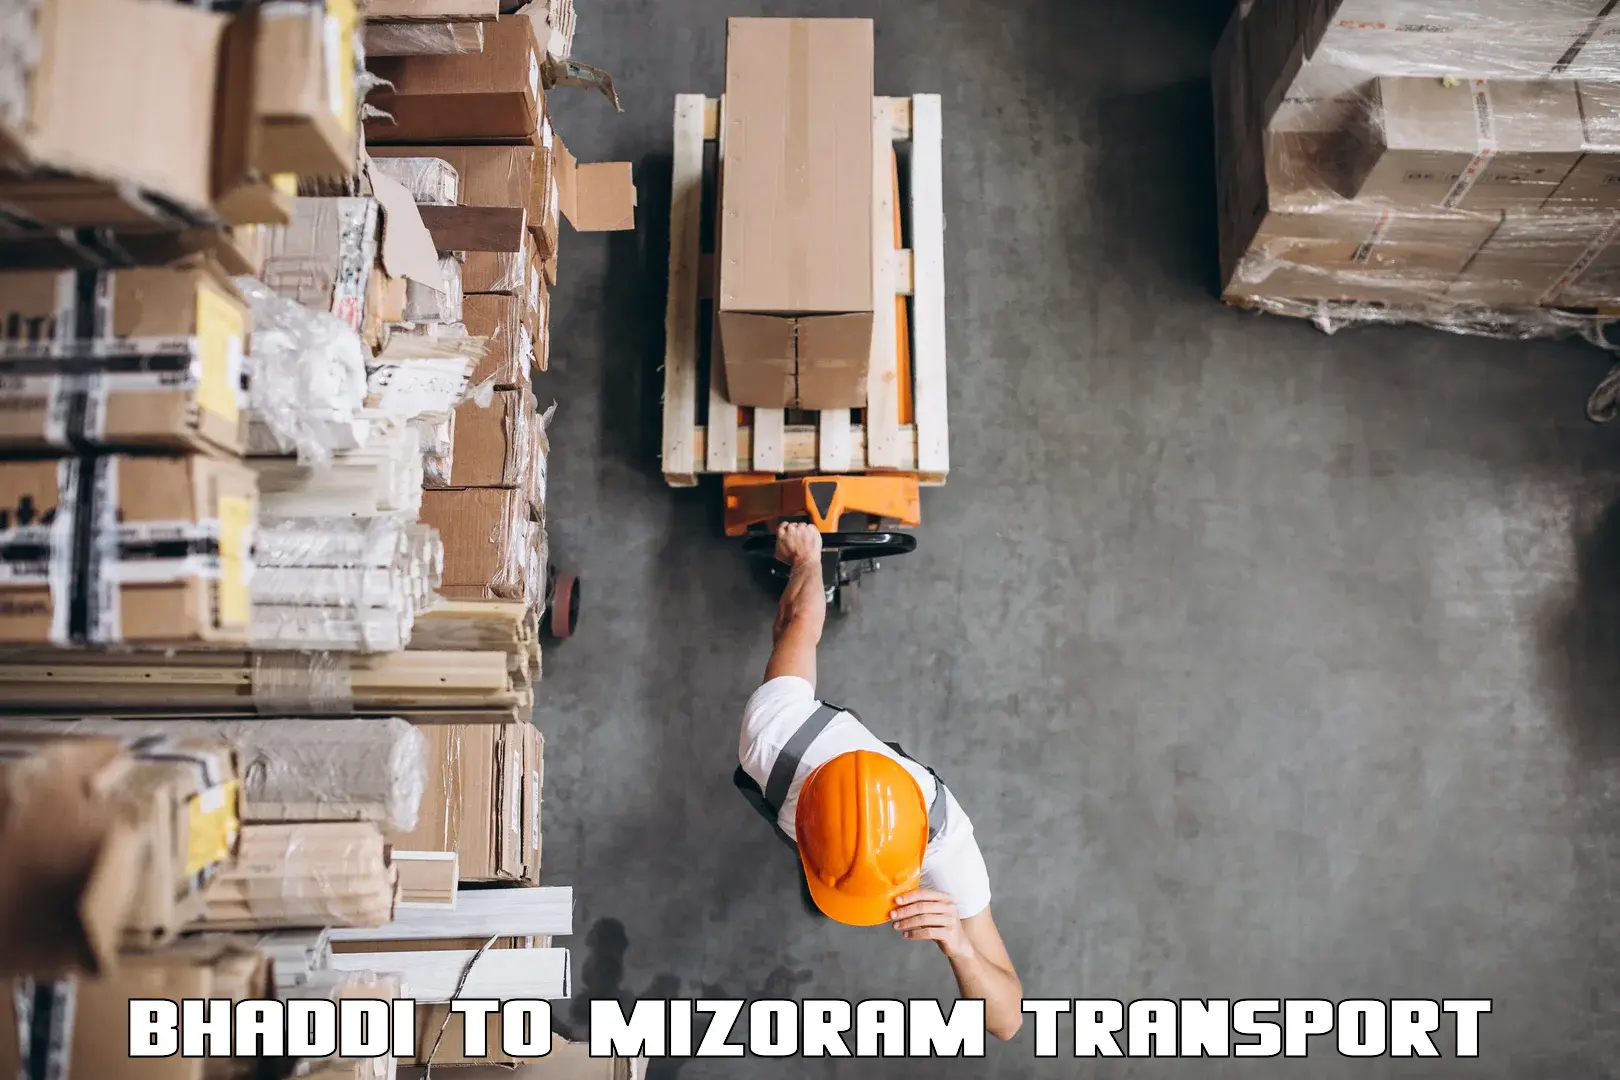 Daily parcel service transport Bhaddi to Mizoram